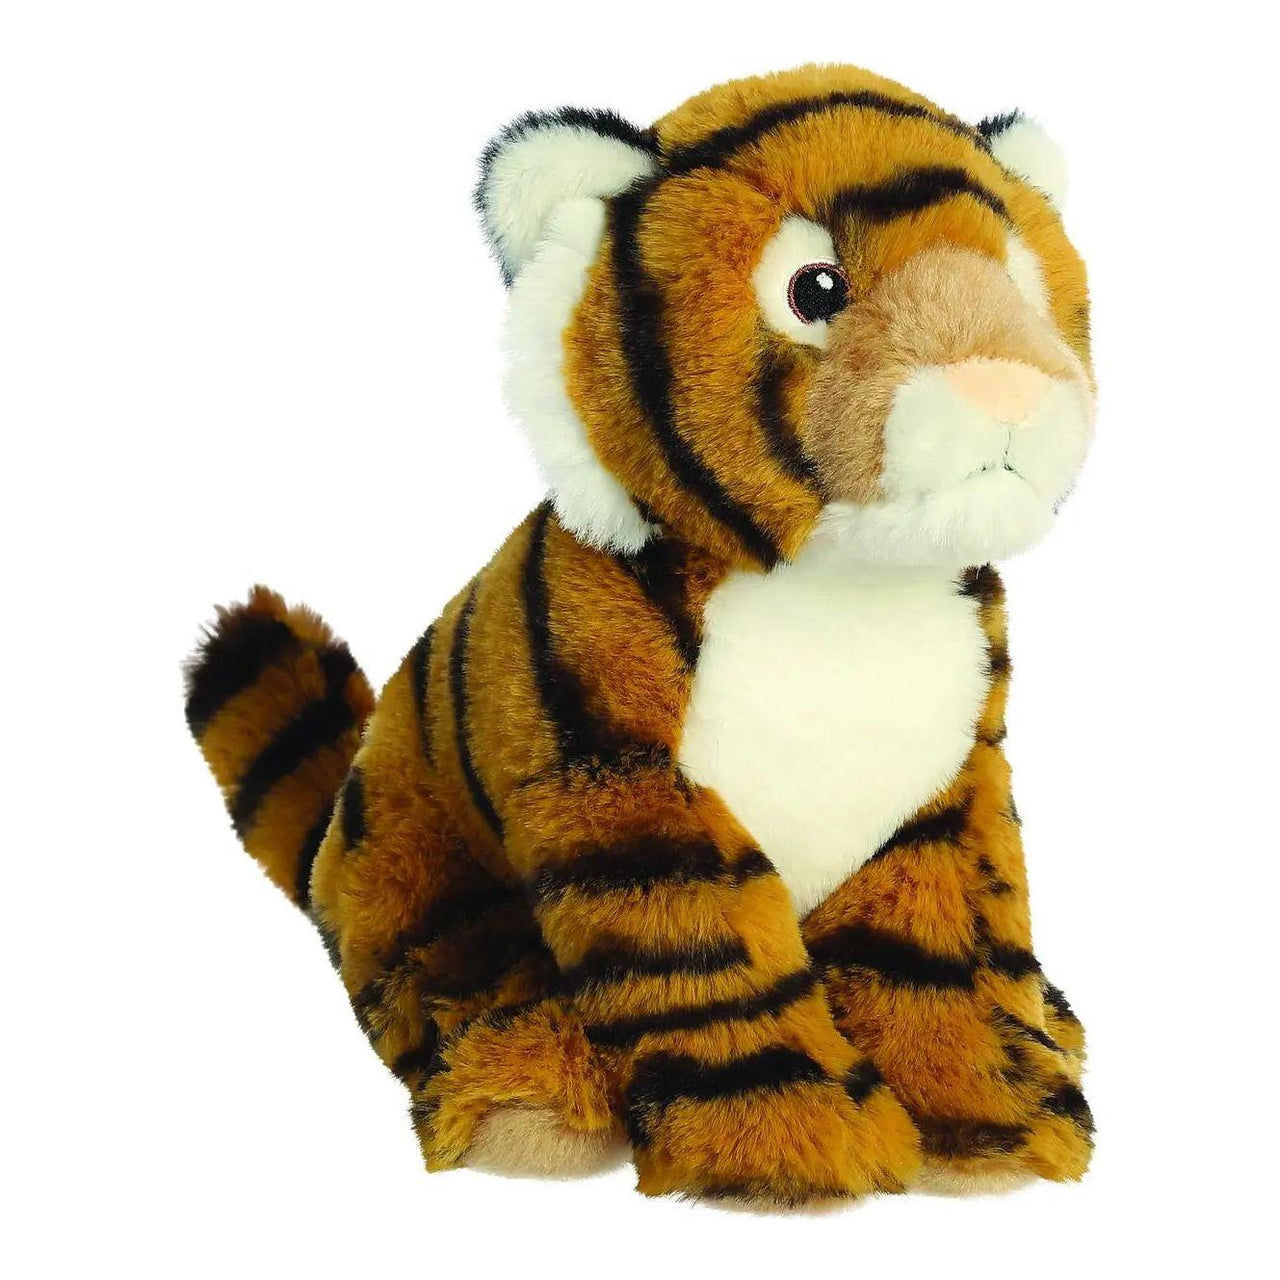 Eco Nation Bengal Tiger 9" Plush Toy Aurora